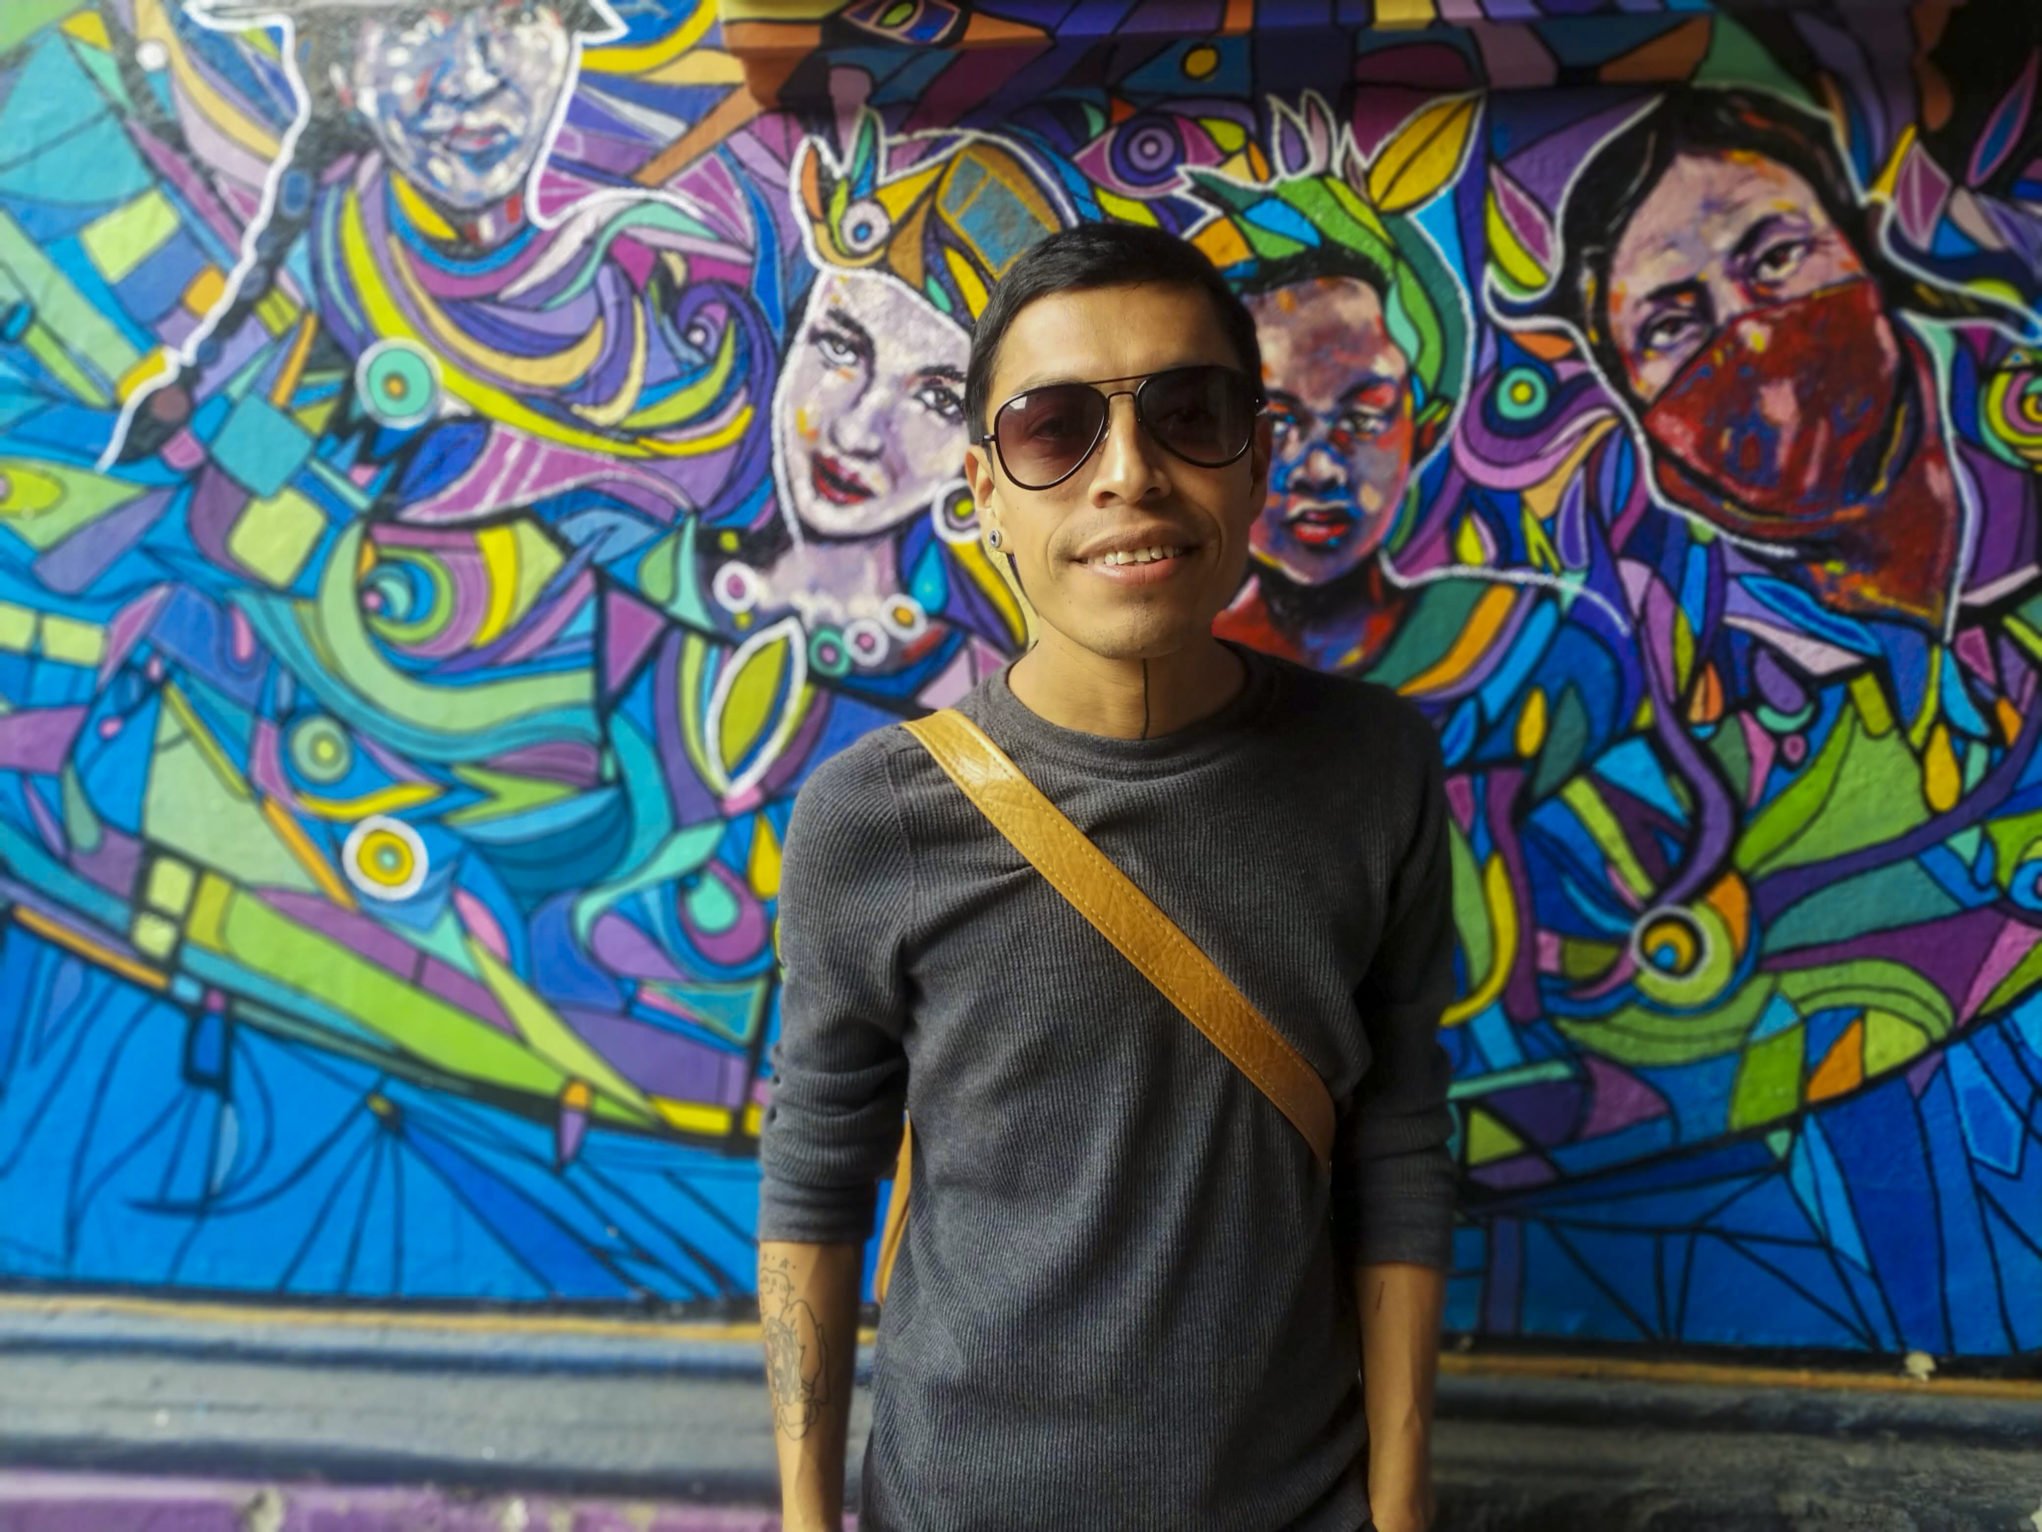 Manuel Tzoc poses on a graffiti wall on Feb. 11, 2020, in Guatemala City.